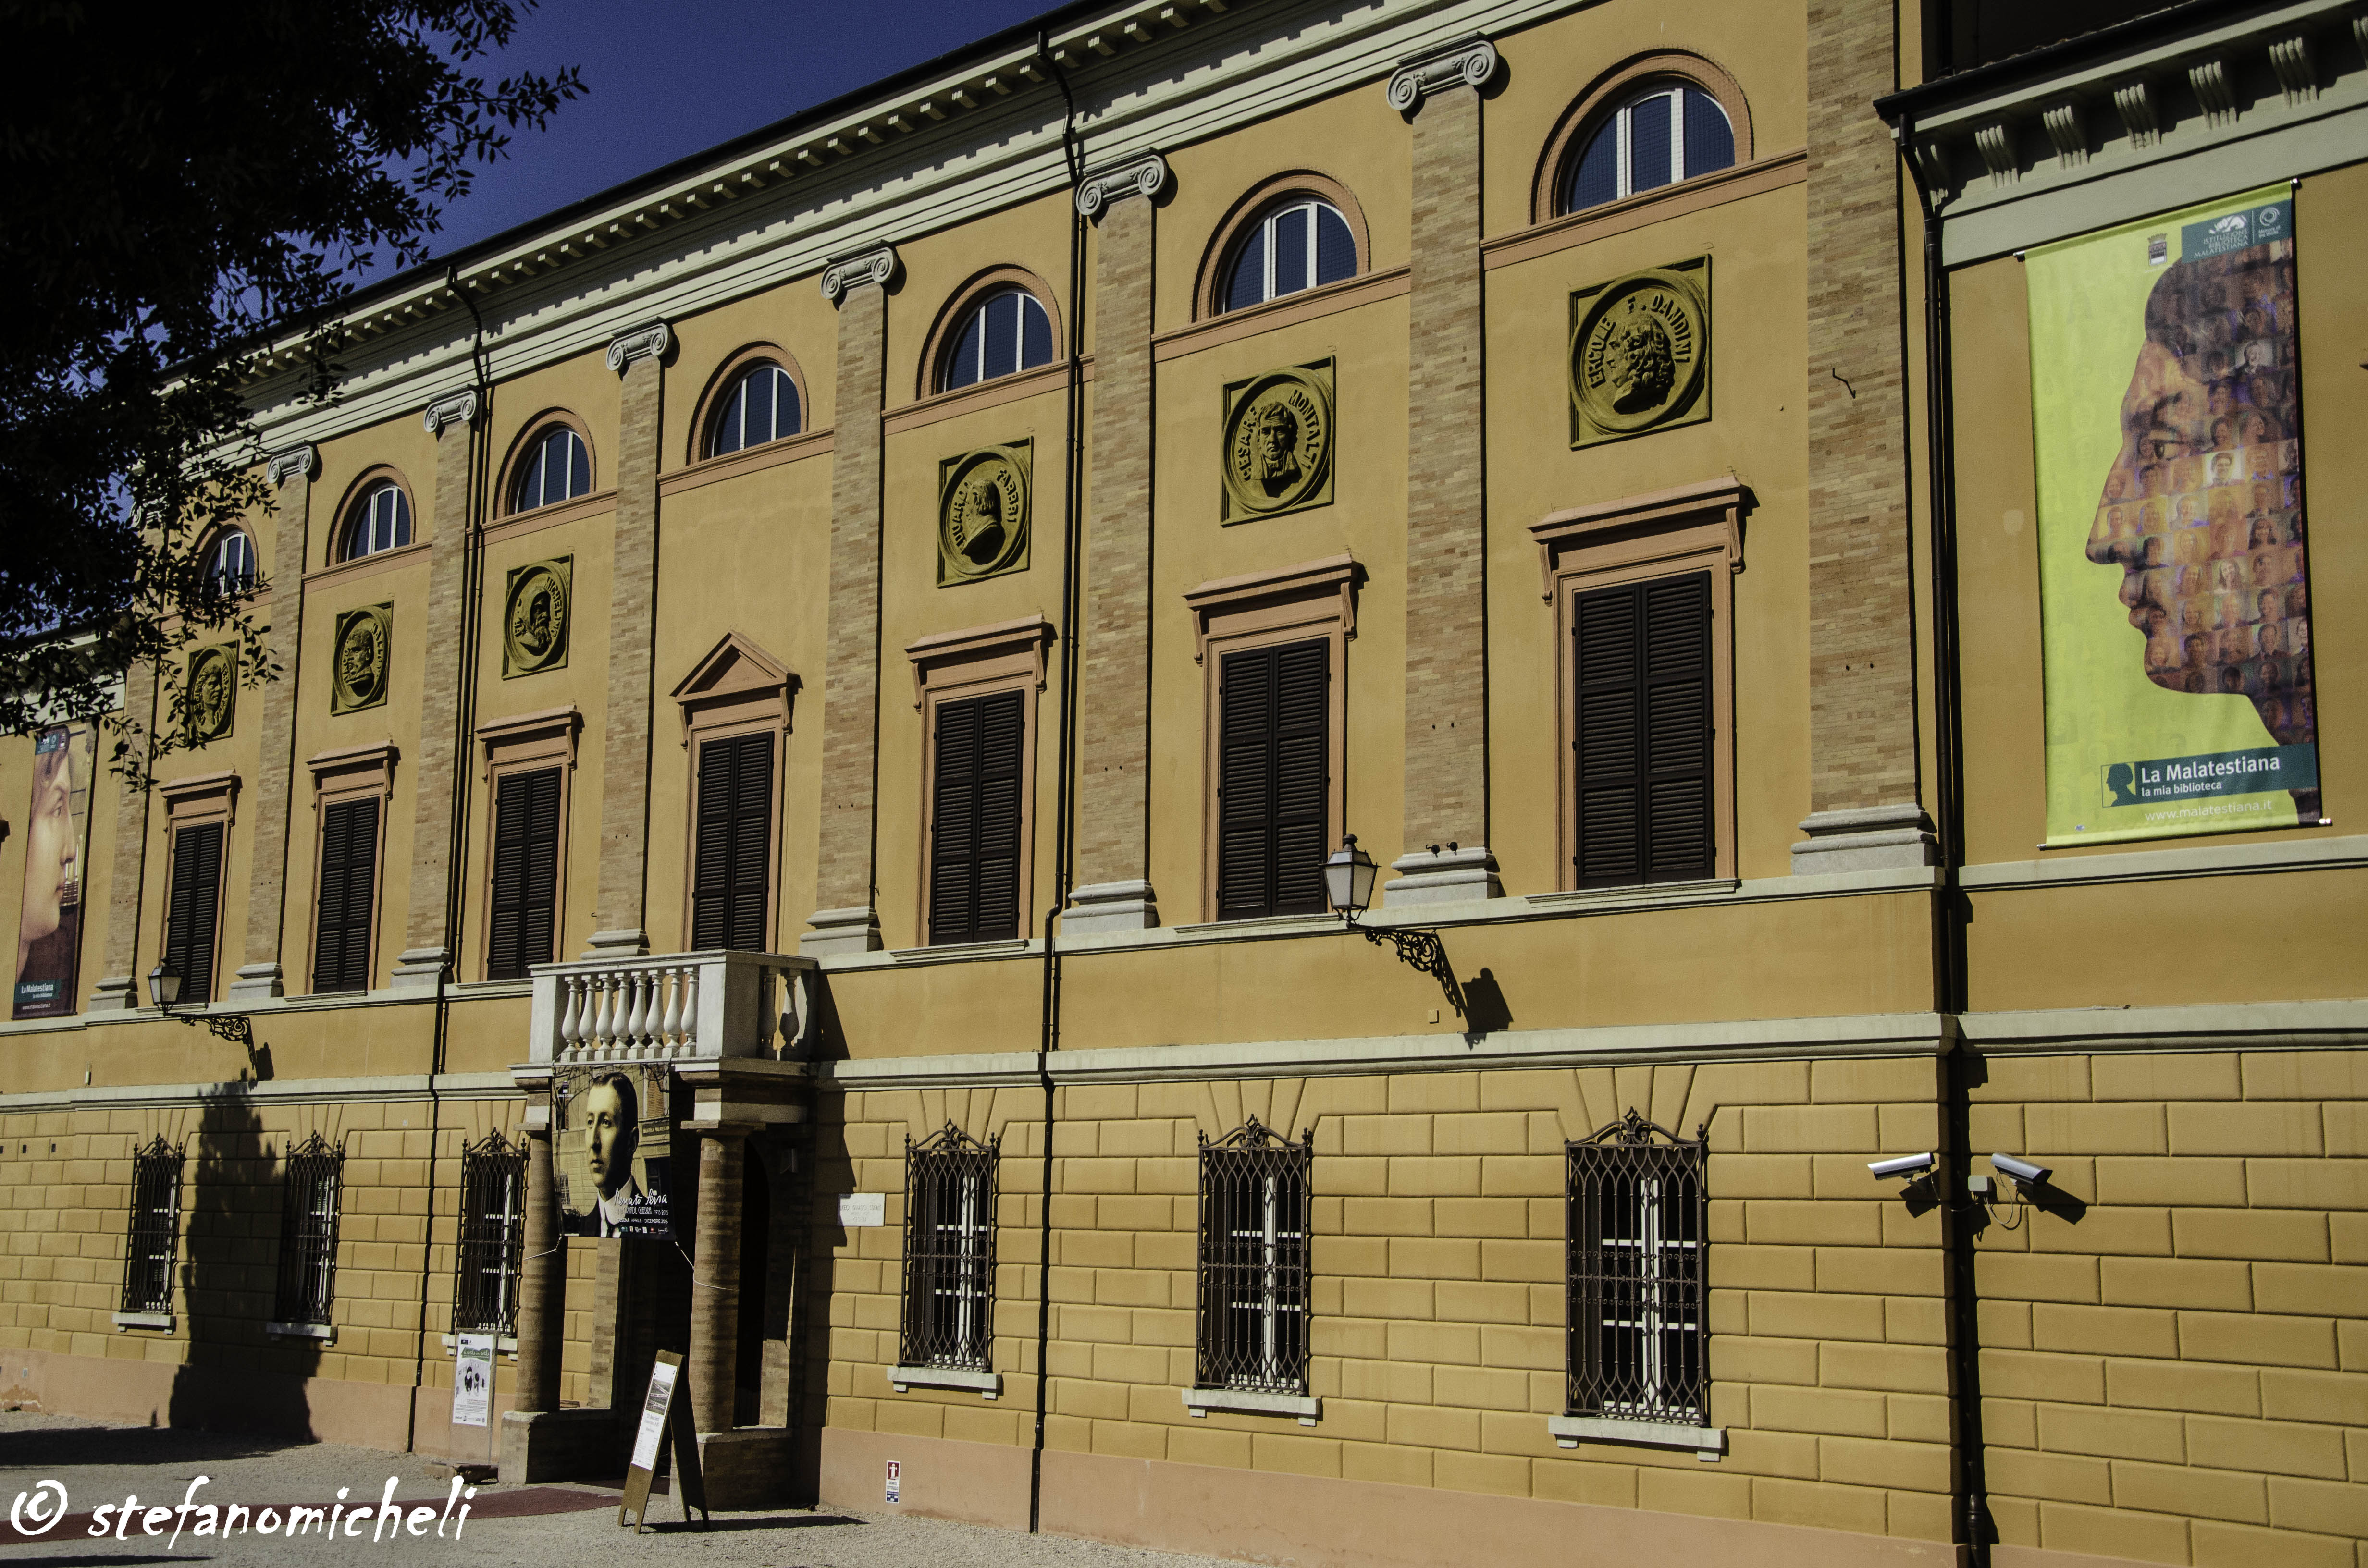 photo: https://upload.wikimedia.org/wikipedia/commons/c/cc/Piazza_Bufalini_-_Cesena_-_DSC_2119.jpg